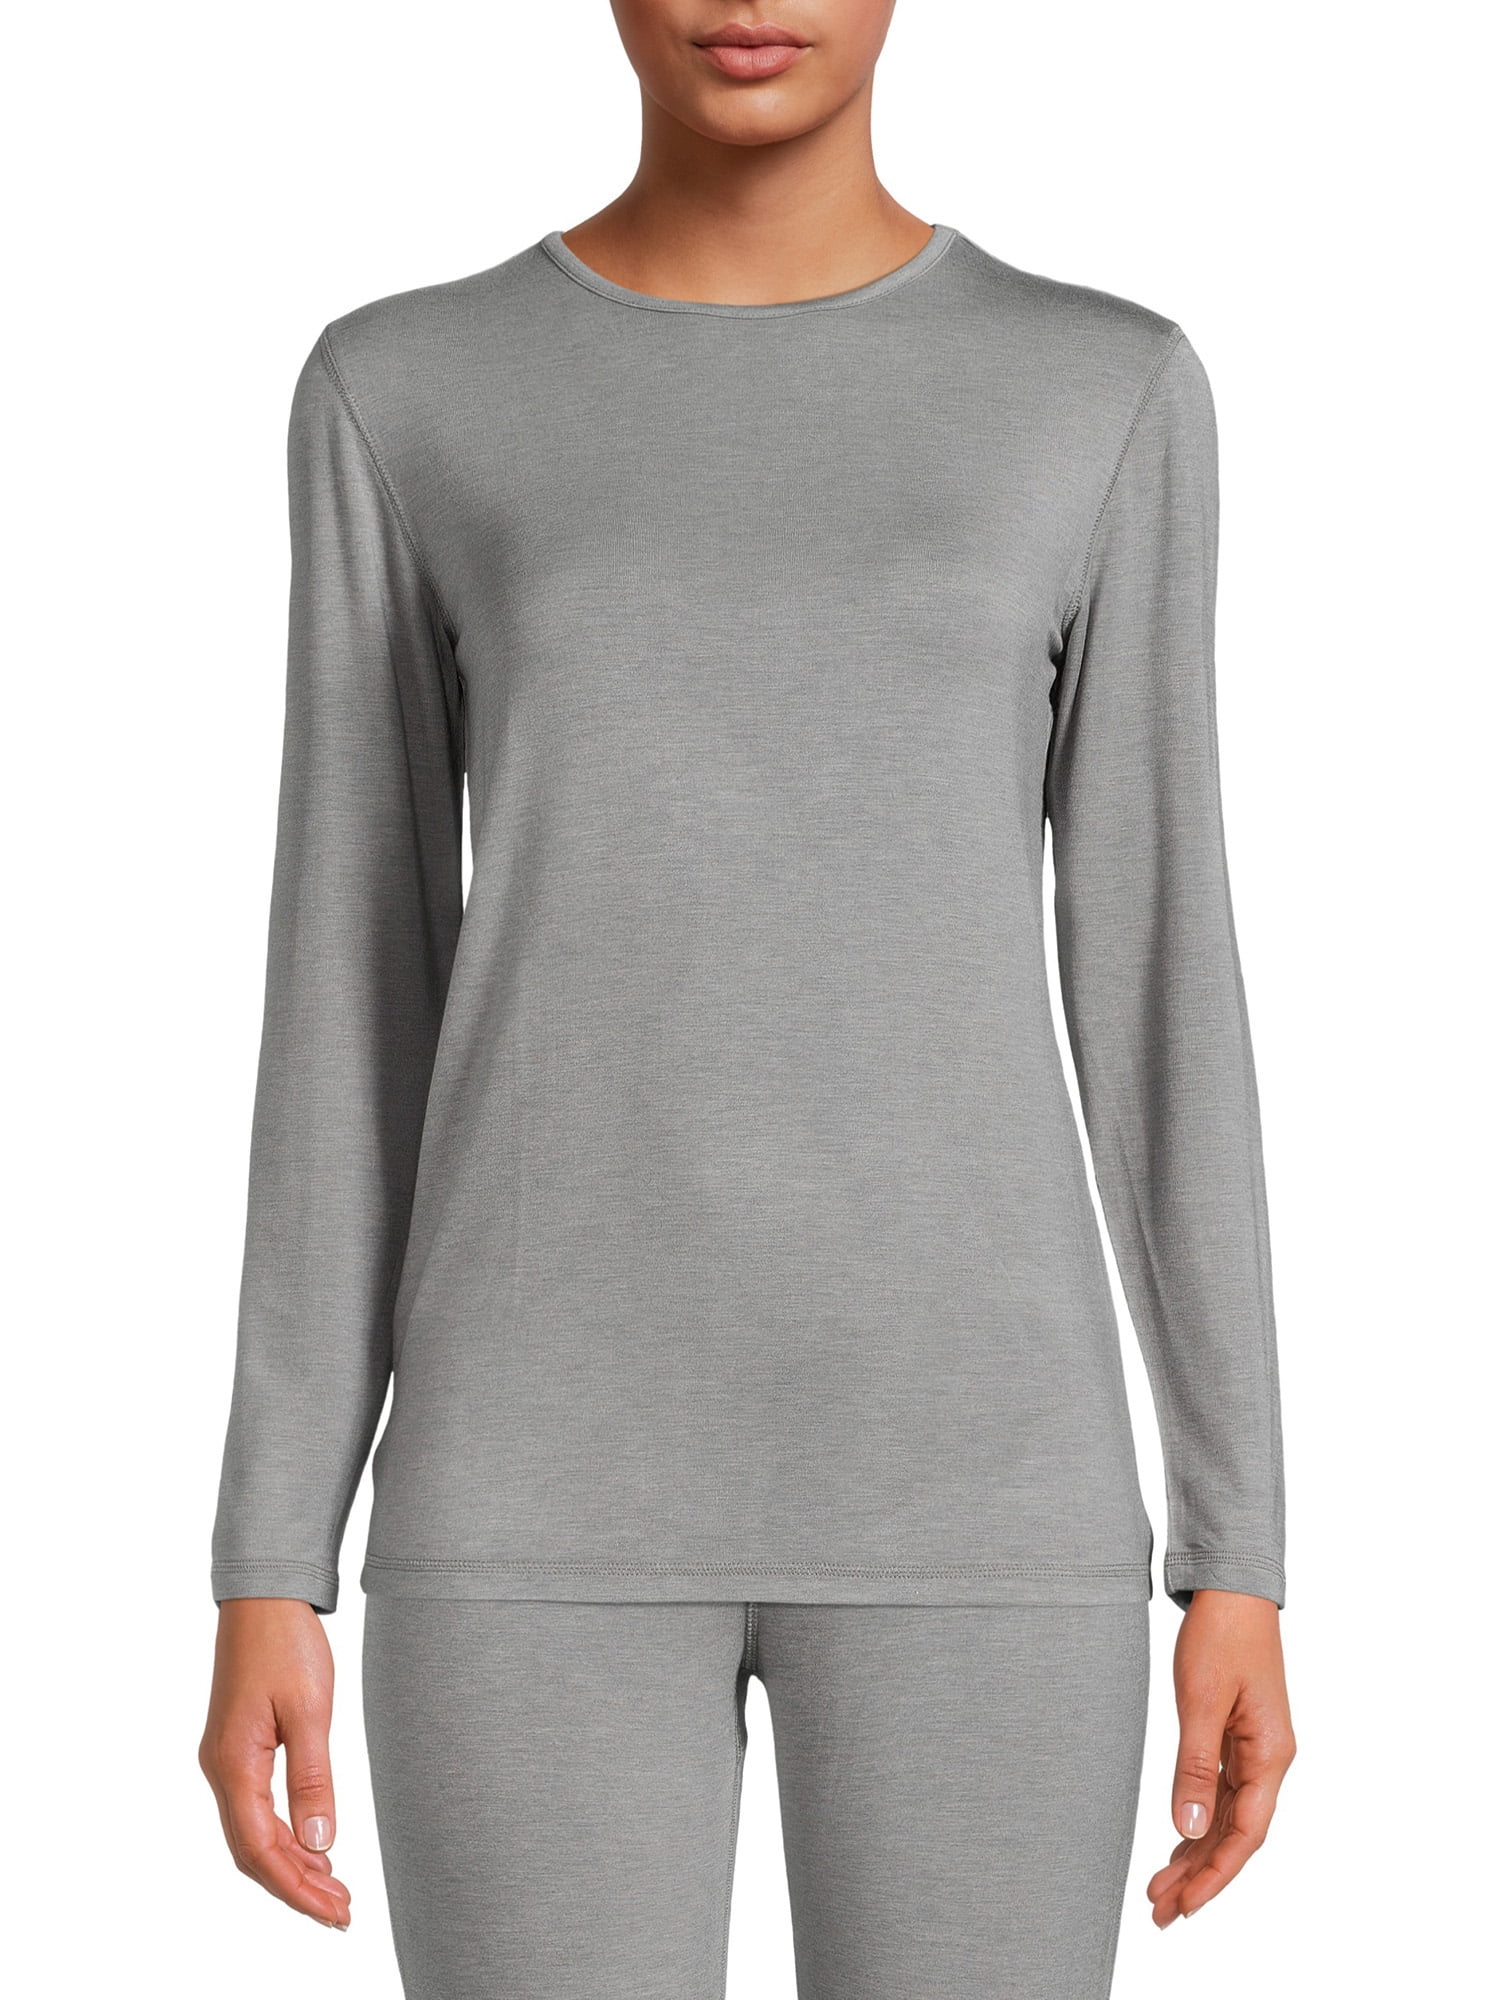 Subuteay Womens Thermal Top V Neck Fleece Lined Shirt Long Sleeve Base Layer Undershirt Lightweight Soft 